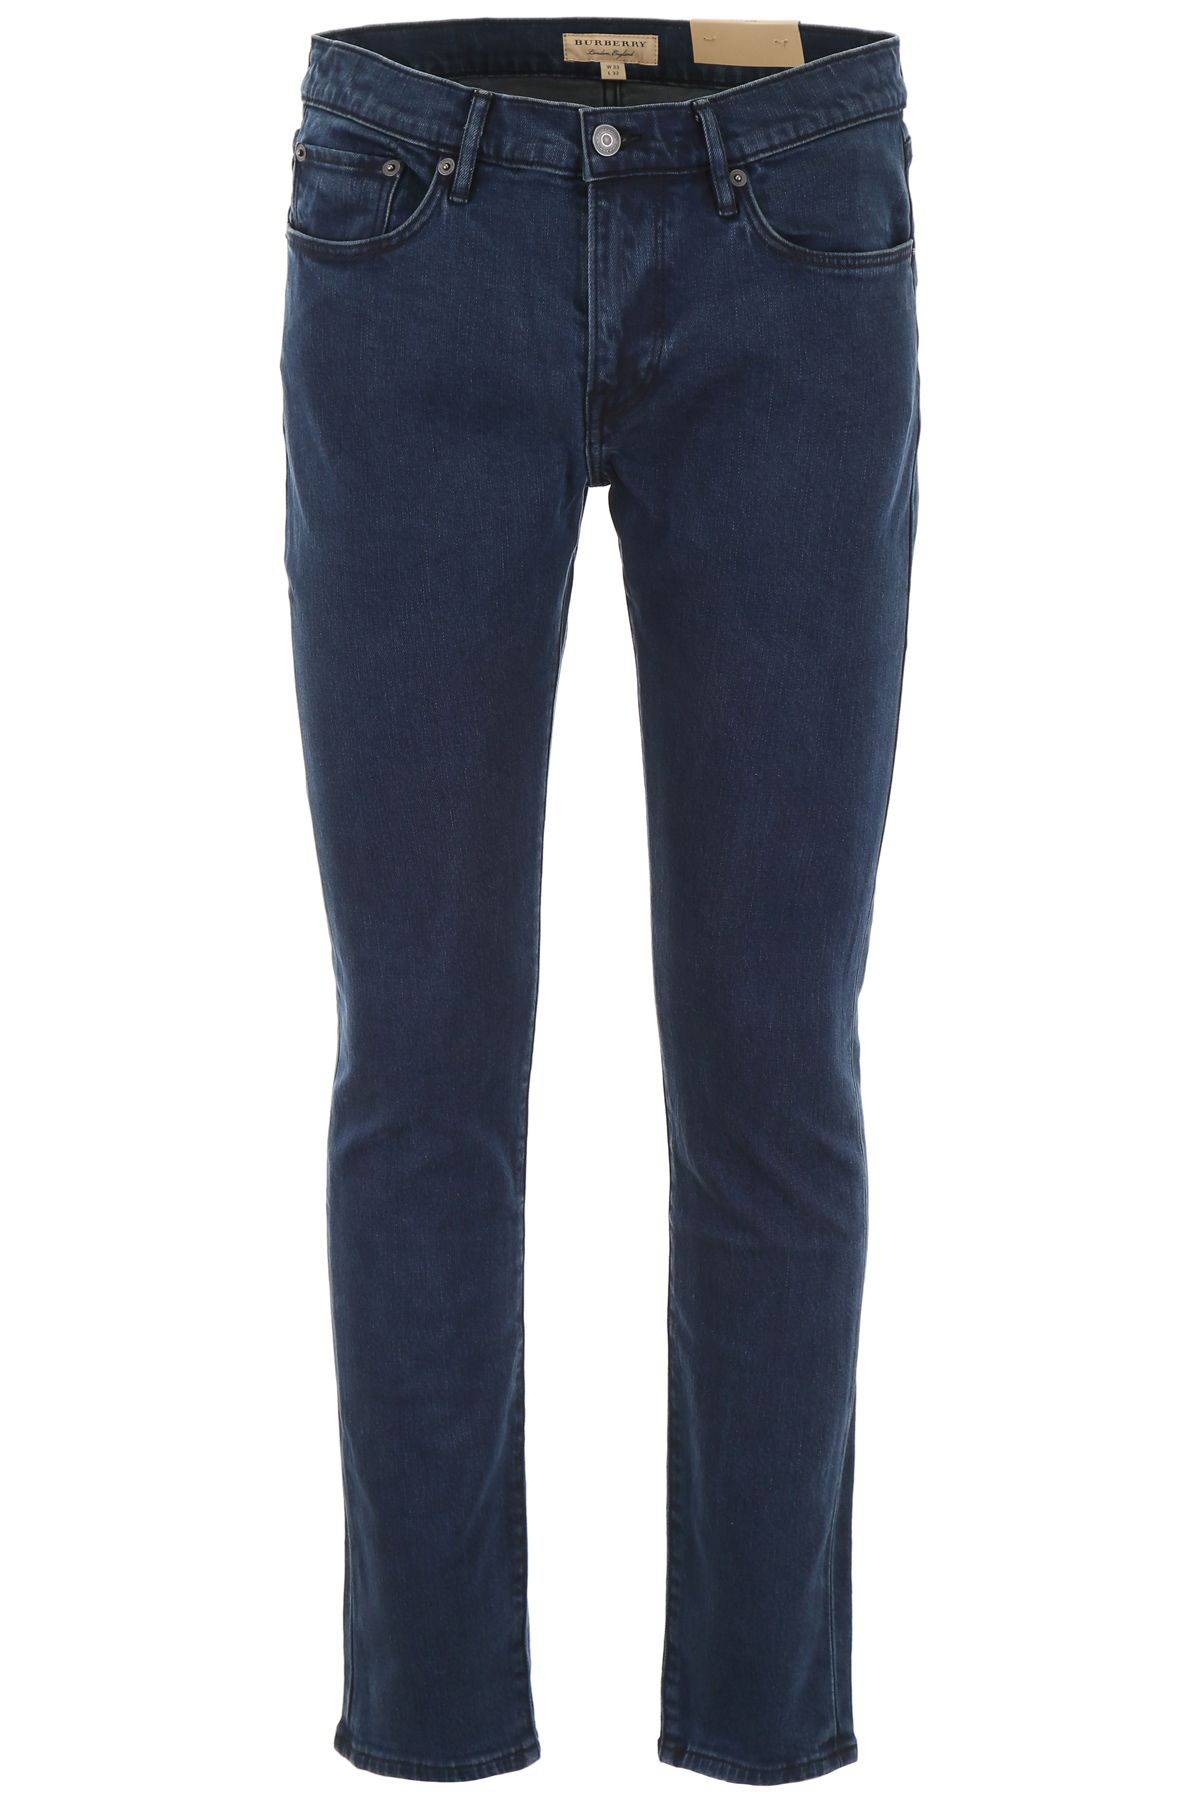 Burberry Slim Jeans In Dark Indigo|blu | ModeSens